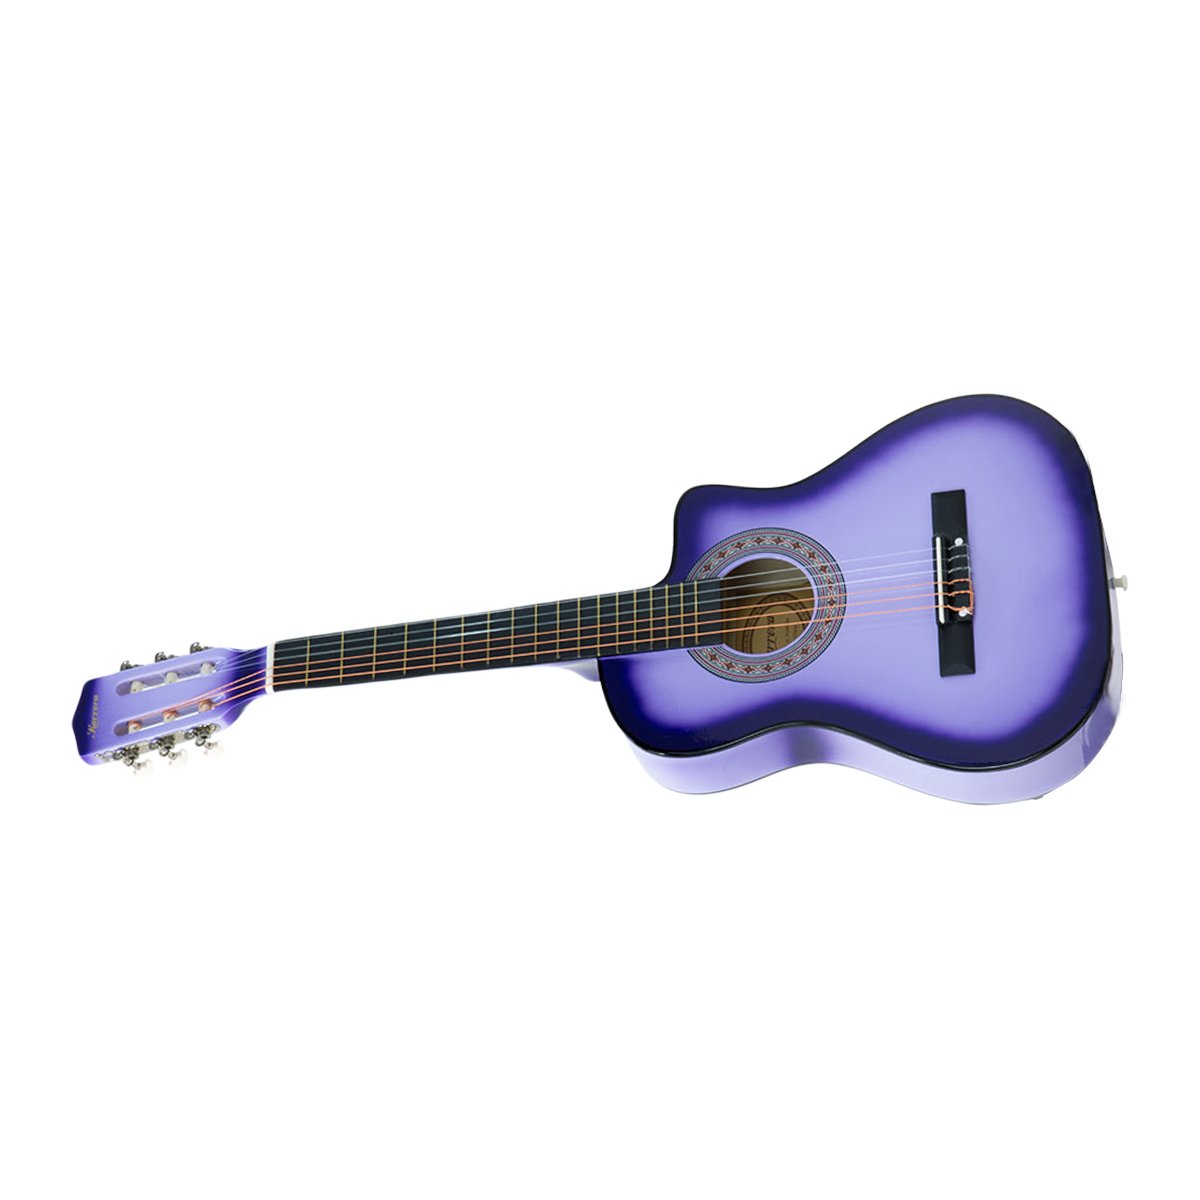 Karrera 38in Pro Cutaway Acoustic Guitar with guitar bag - Purple Burst - SILBERSHELL